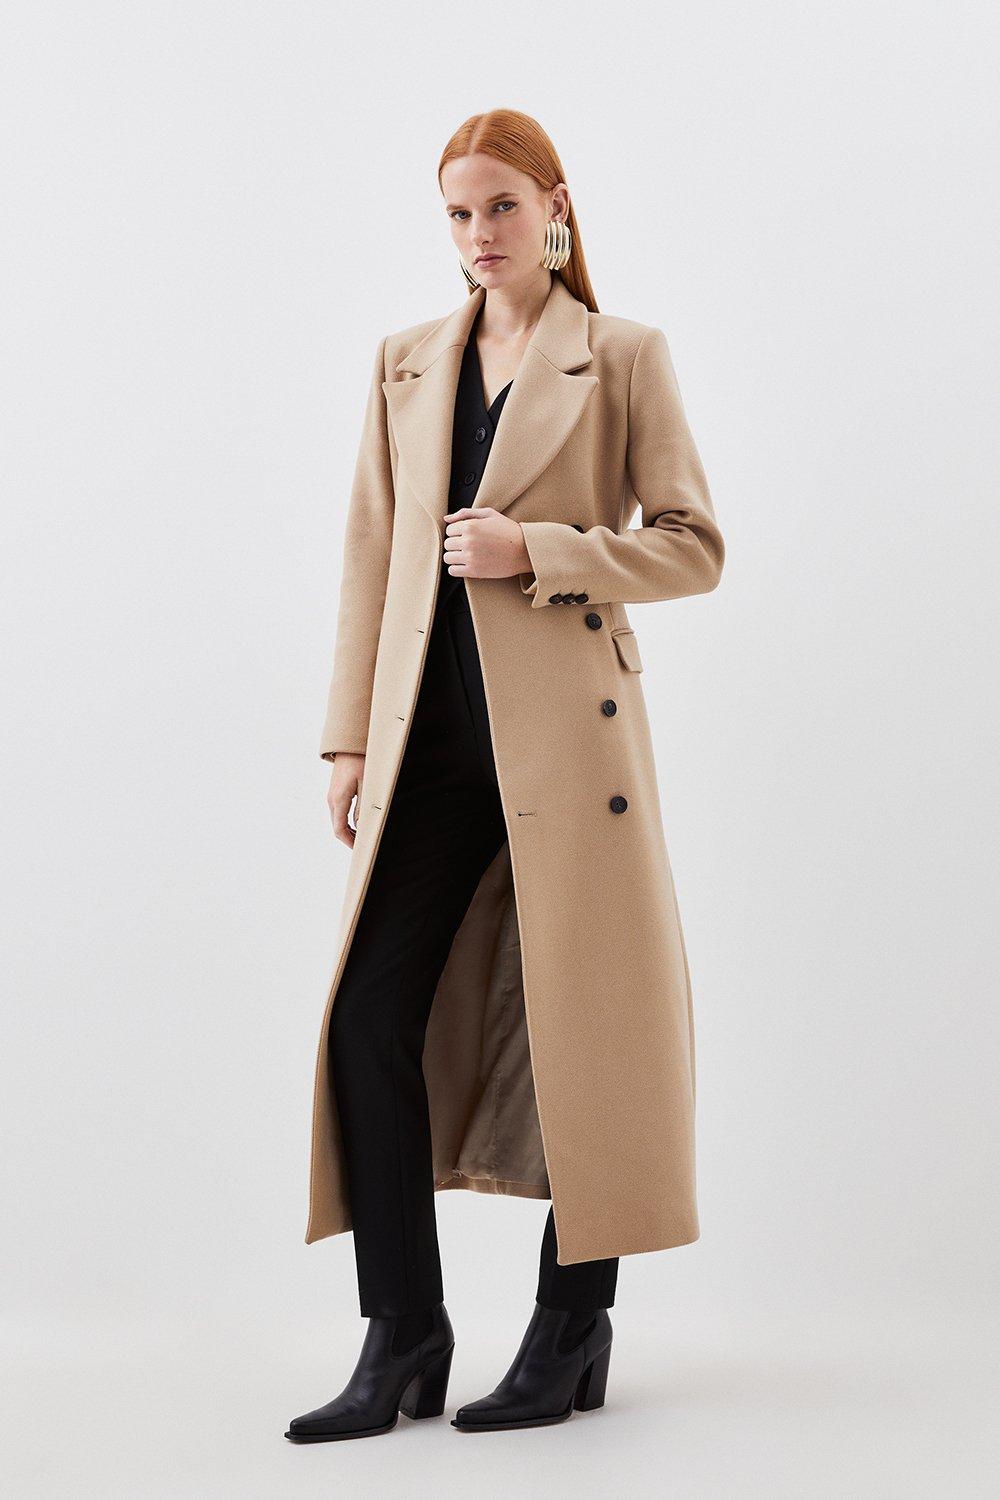 Tailored Coats